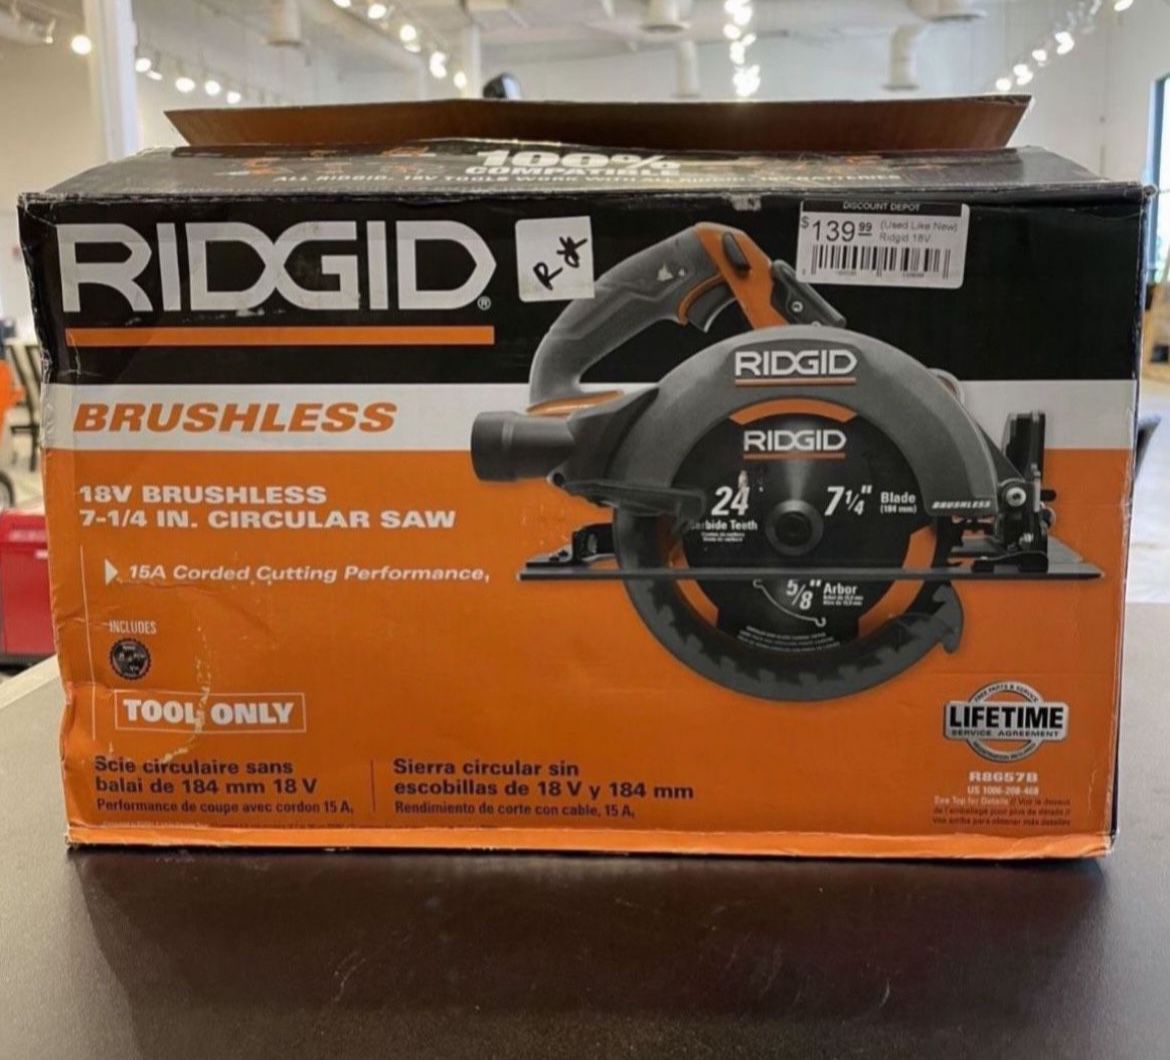 Ridgid 18V Brushless 7-1/4 In Circular Saw (tool Only)R8657B